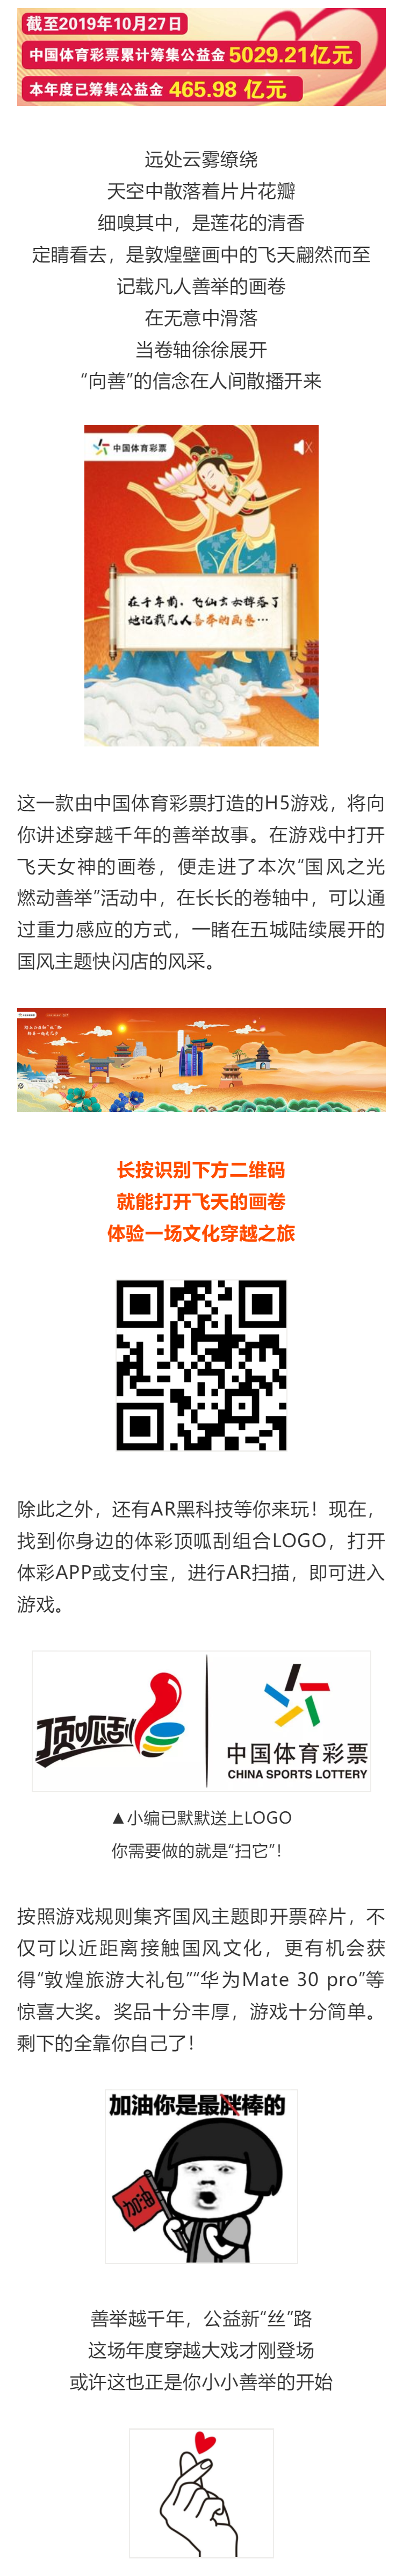 20191101_0949_yiban_screenshot.png